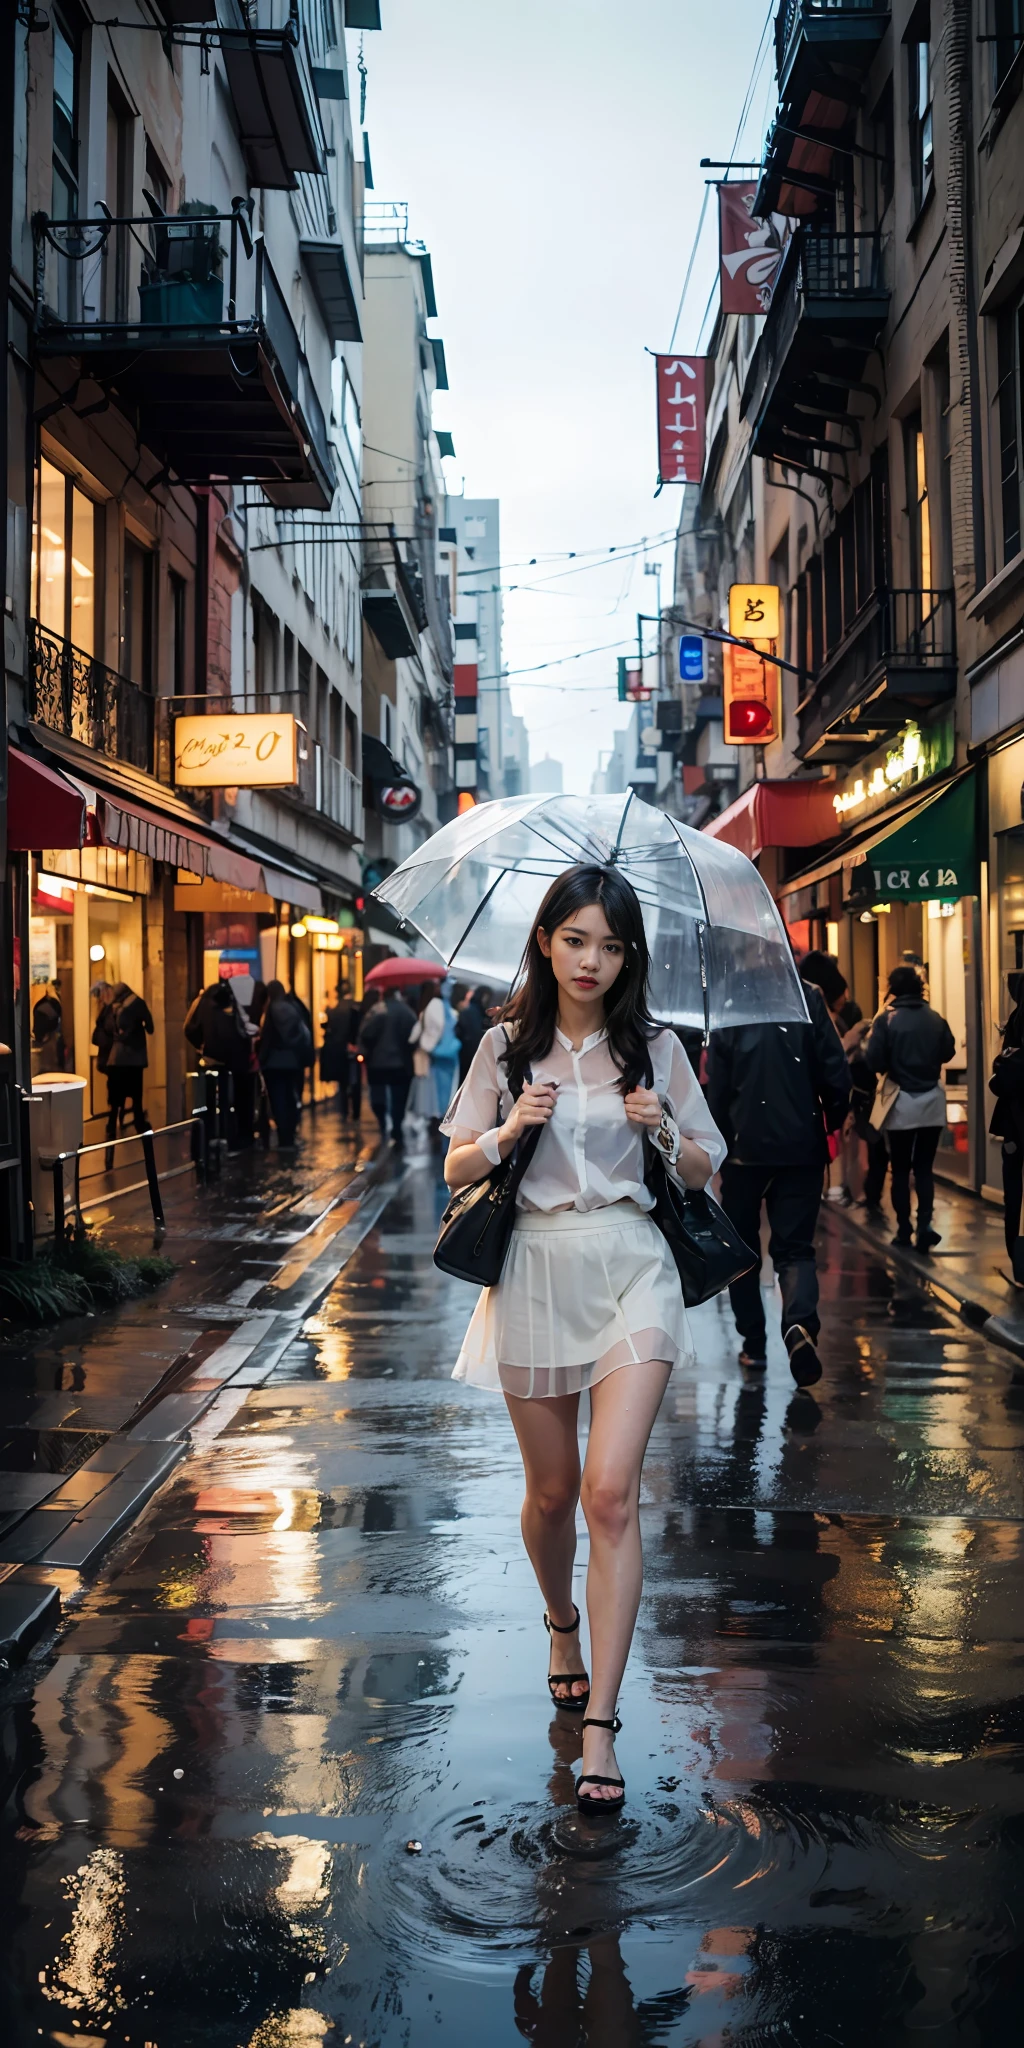 (8K, 原始照片, 高靈敏度, 最好的品質, 傑作, 超高解析度, 保真度: 1.25), 上半身, (夜晚), 雨, 走, 城市的灯光, 精緻的臉, 濕白襯衫, 濕歐根紗裙子